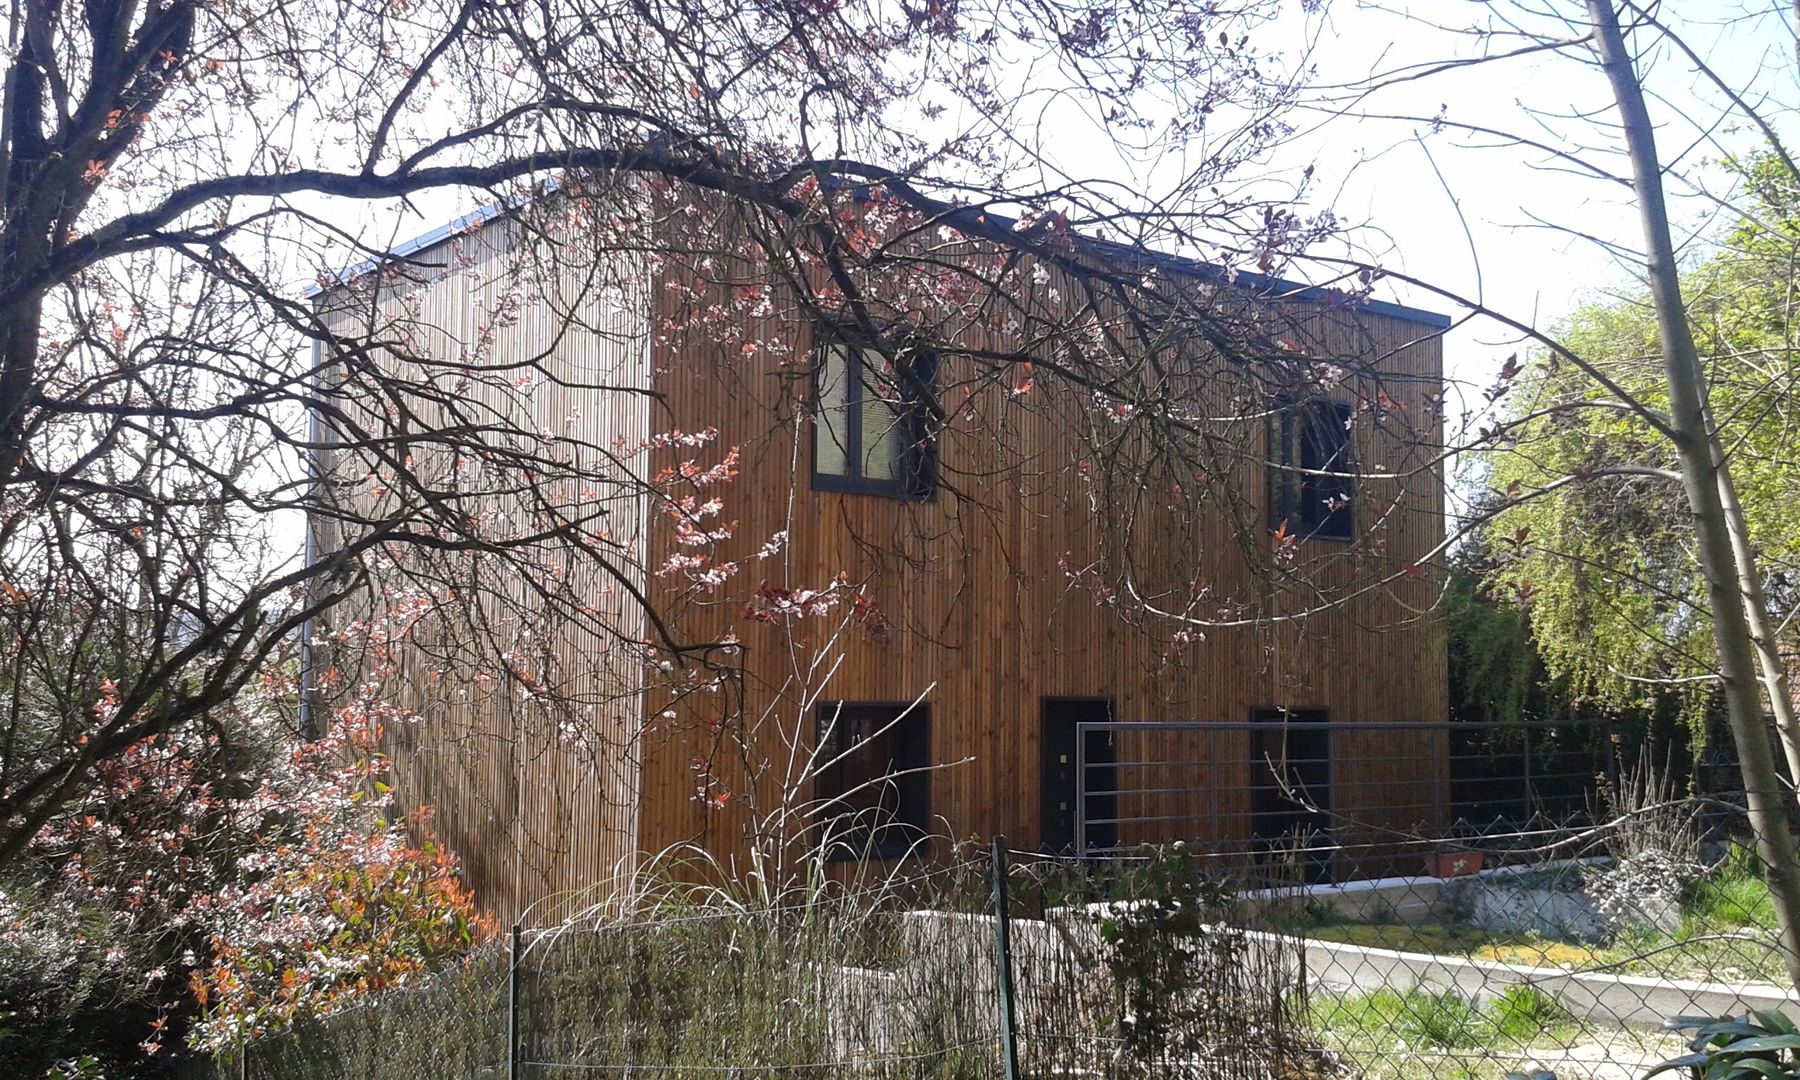 Sur-élévation à Ossature Bois, AADD+ AADD+ Casas modernas: Ideas, imágenes y decoración